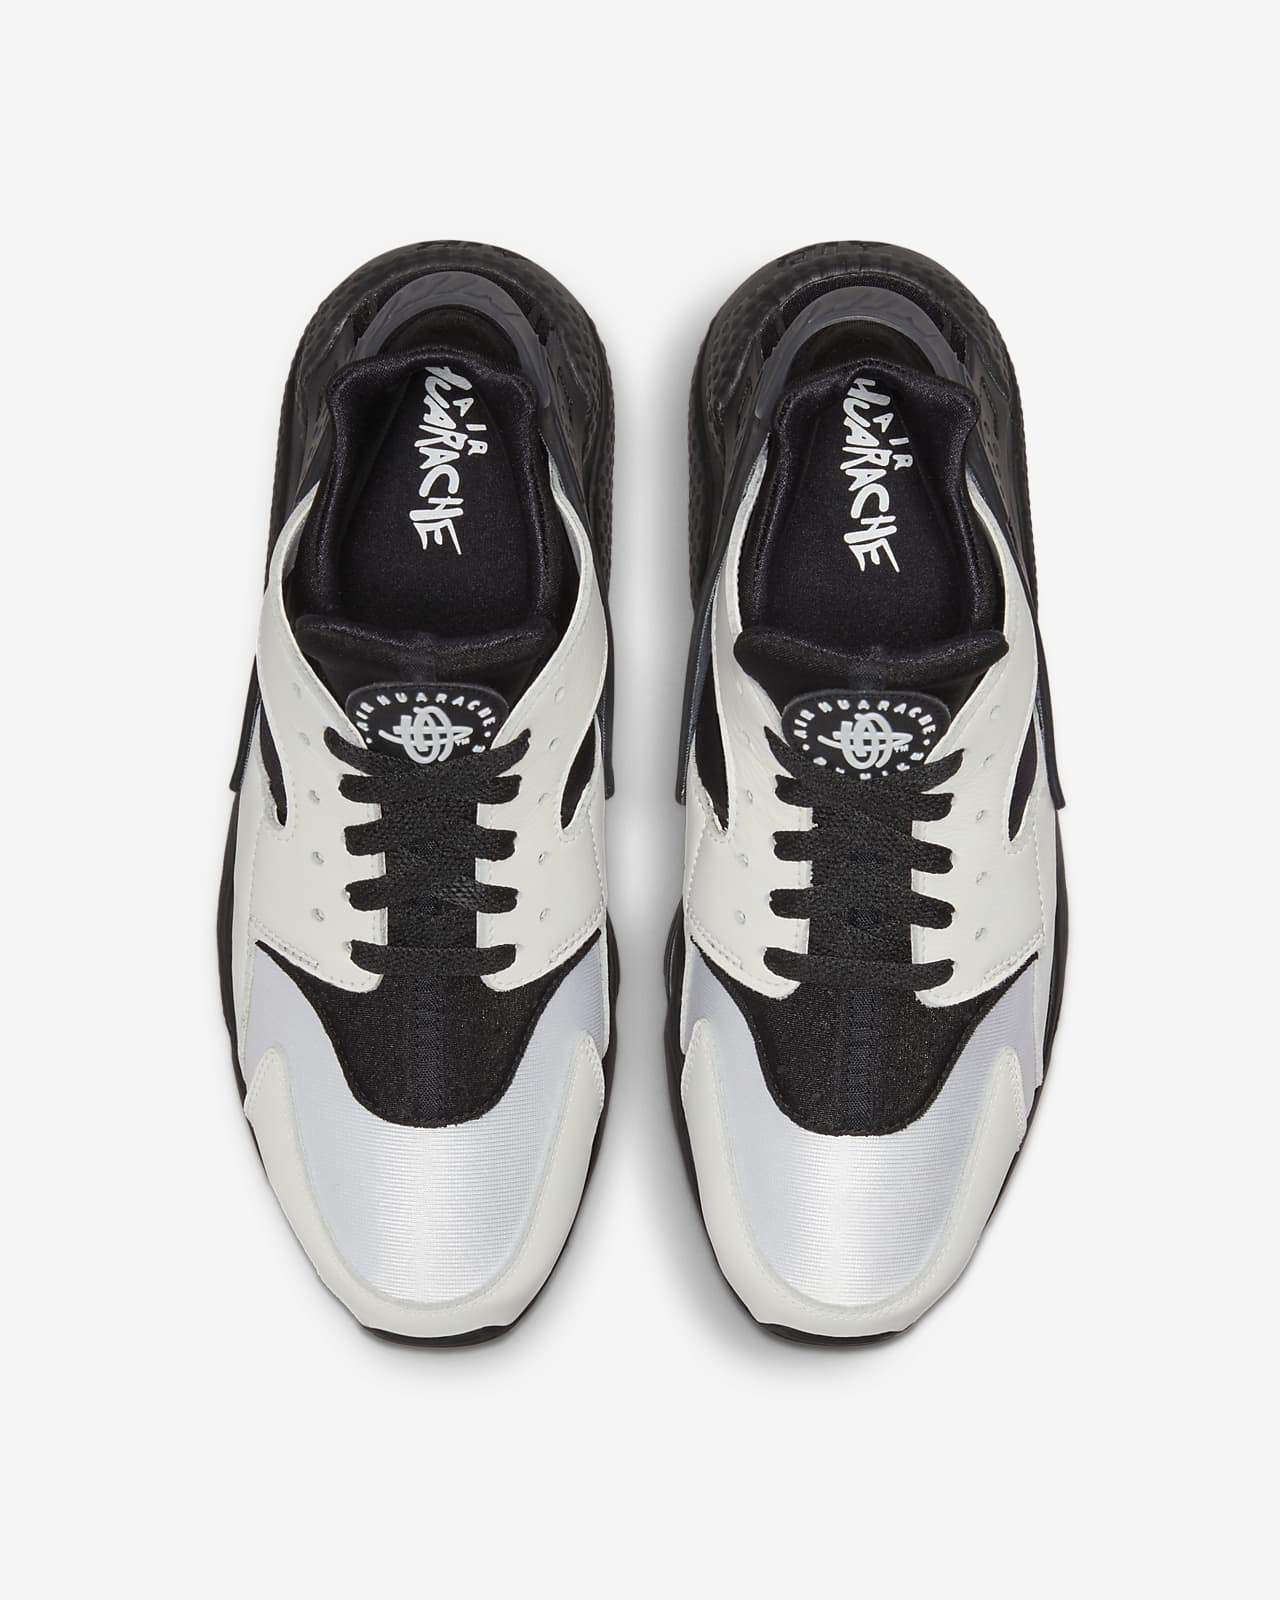 Nike Air Huarache Men's Shoes.